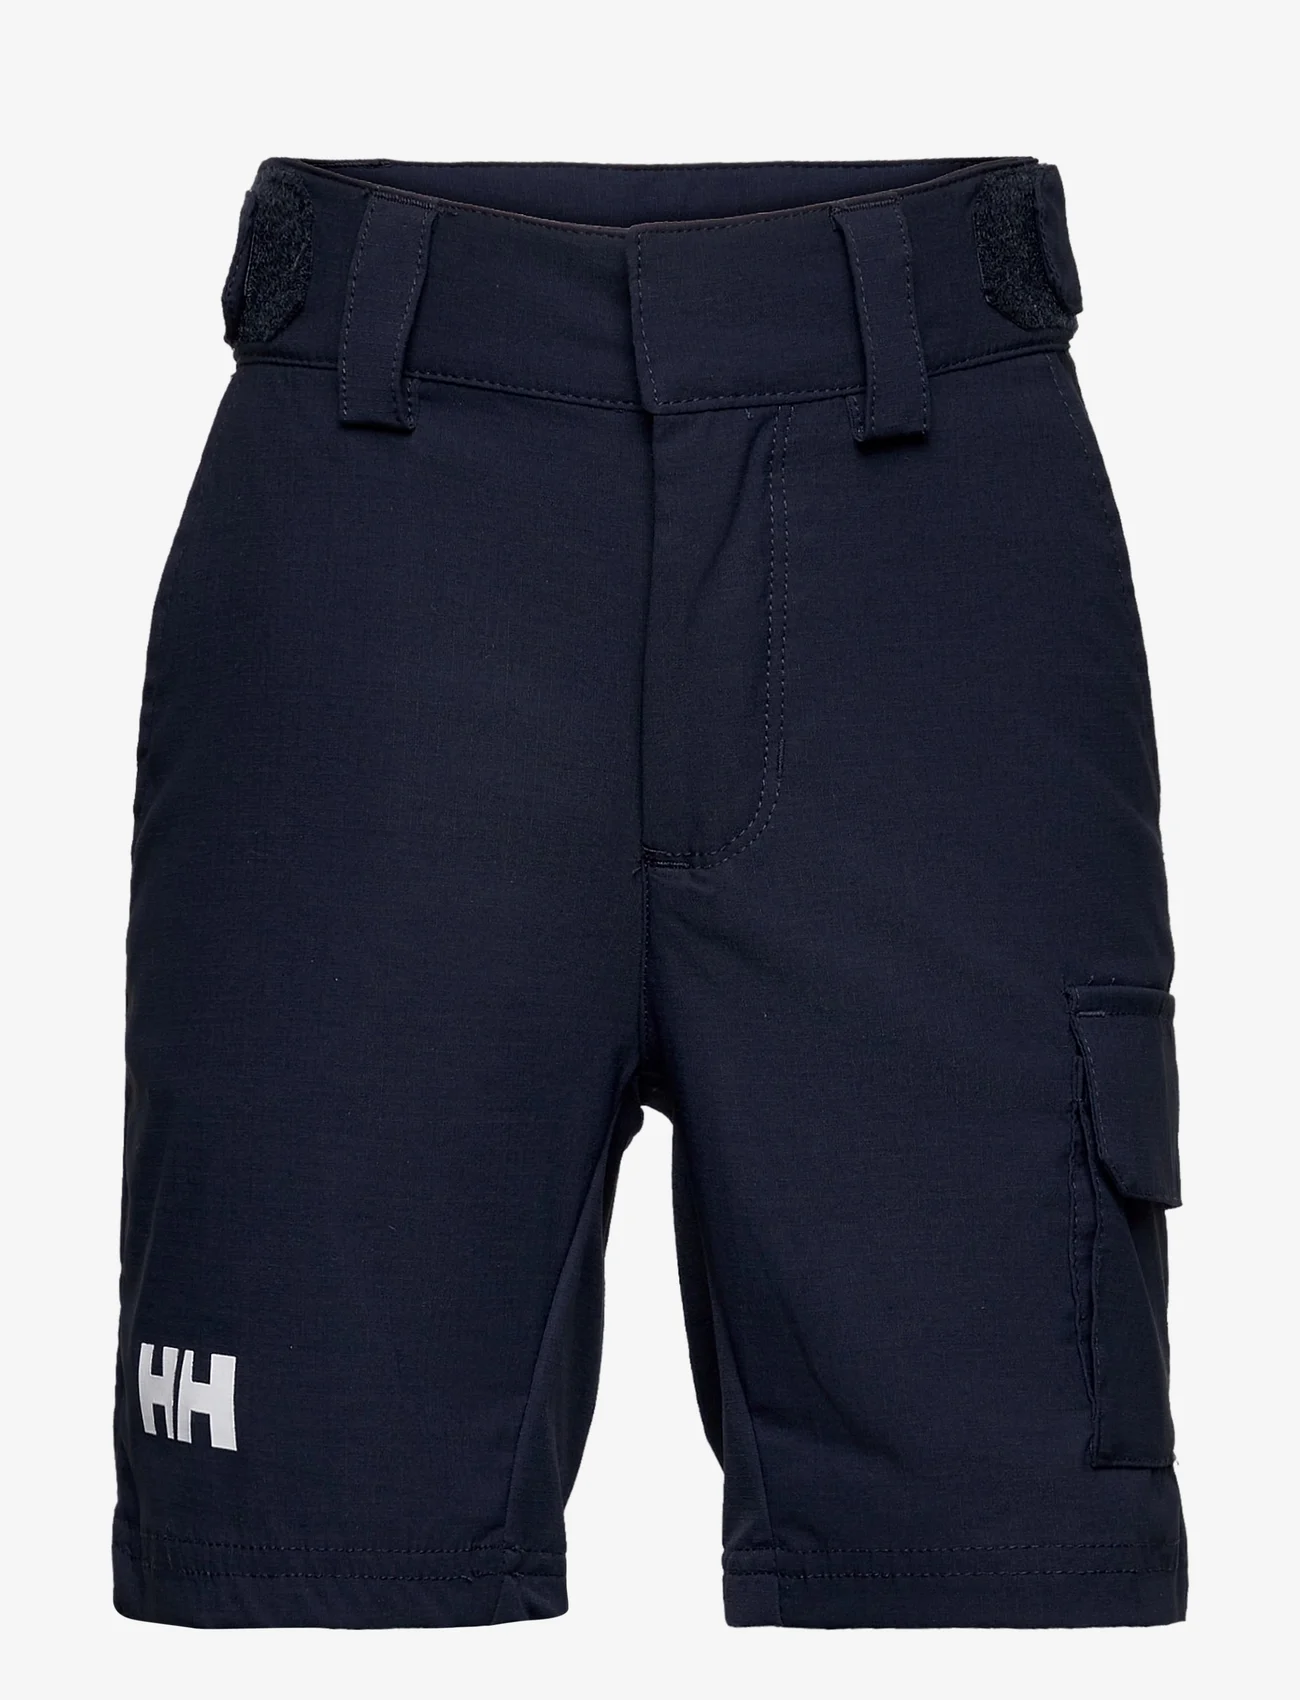 Helly Hansen - JR HH QD CARGO SHORTS - sport-shorts - navy - 0